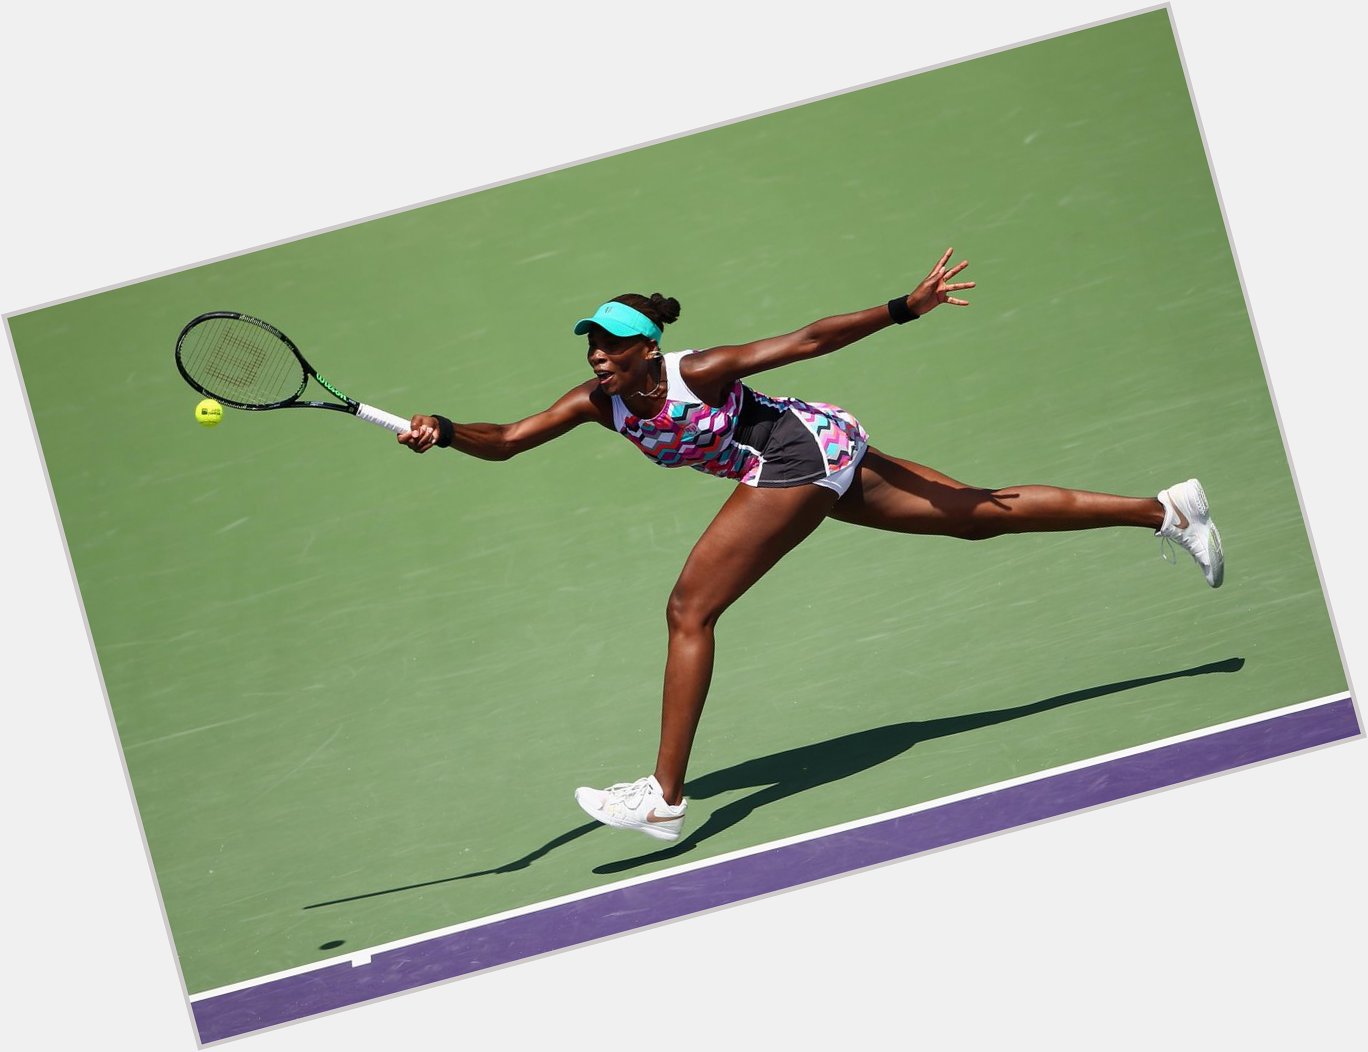 To wish Happy Birthday to our three-time champion Venus Williams! 